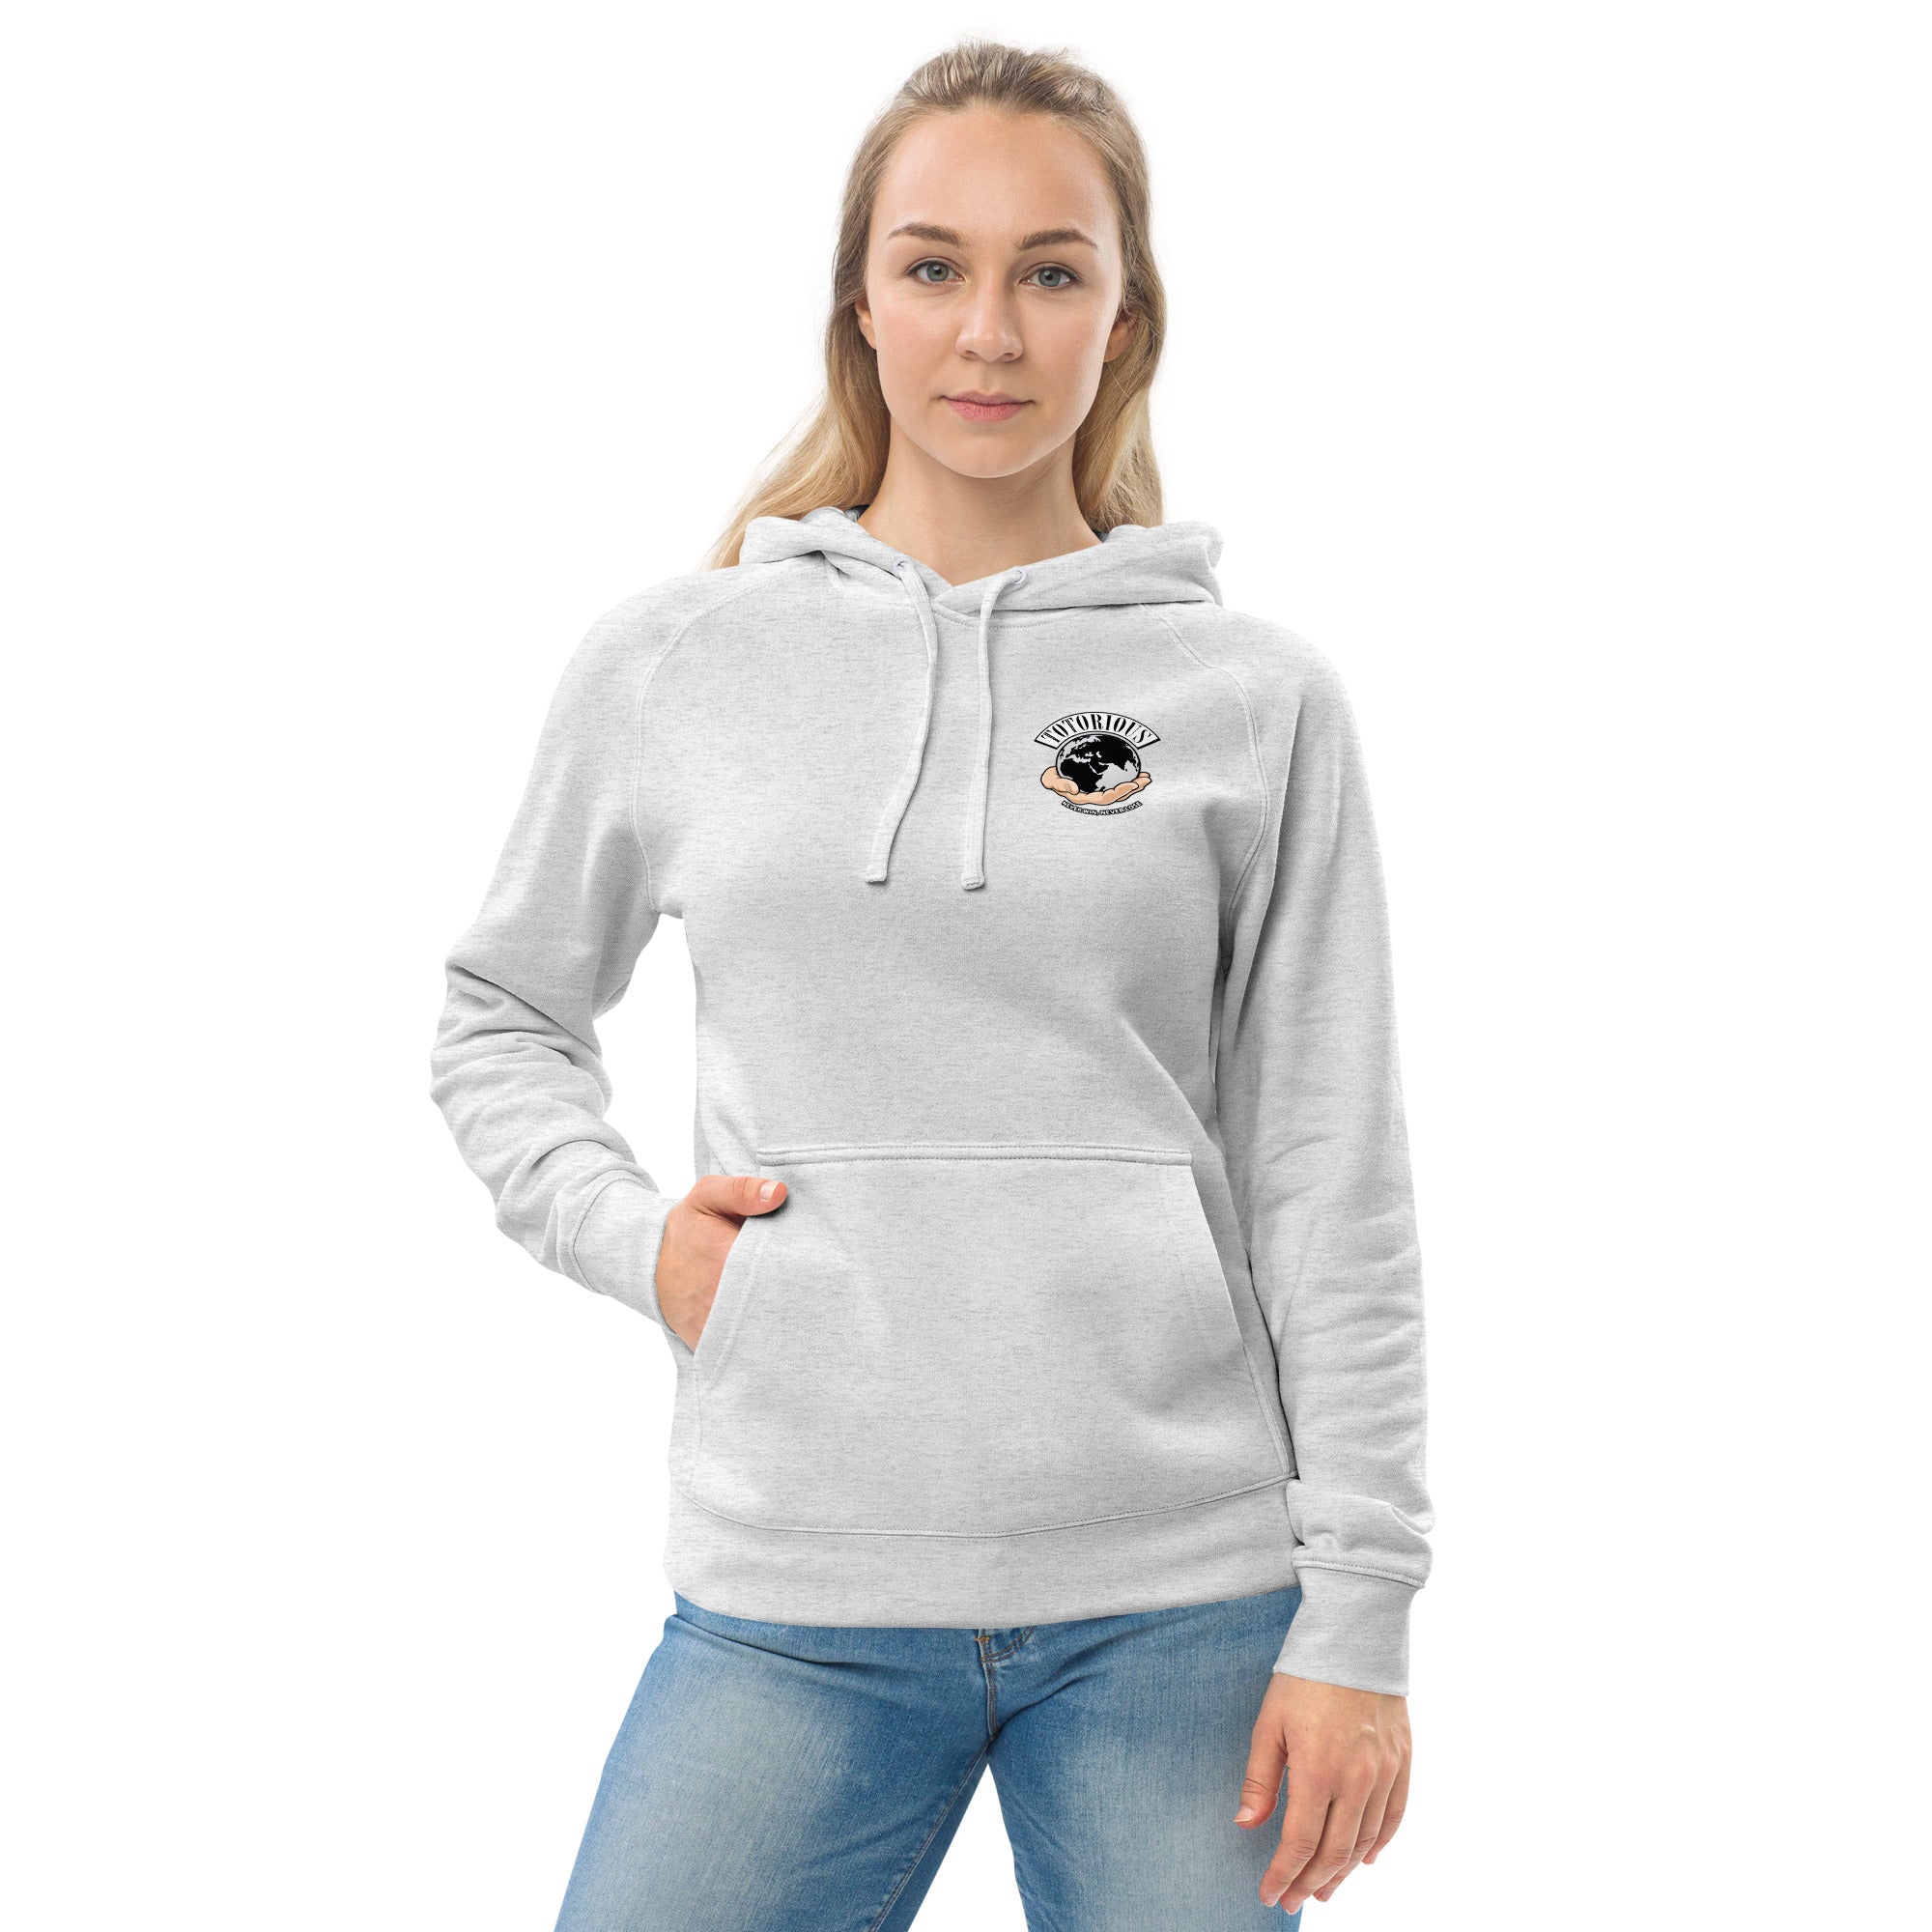 Totorious Unisex kangaroo pocket hoodie